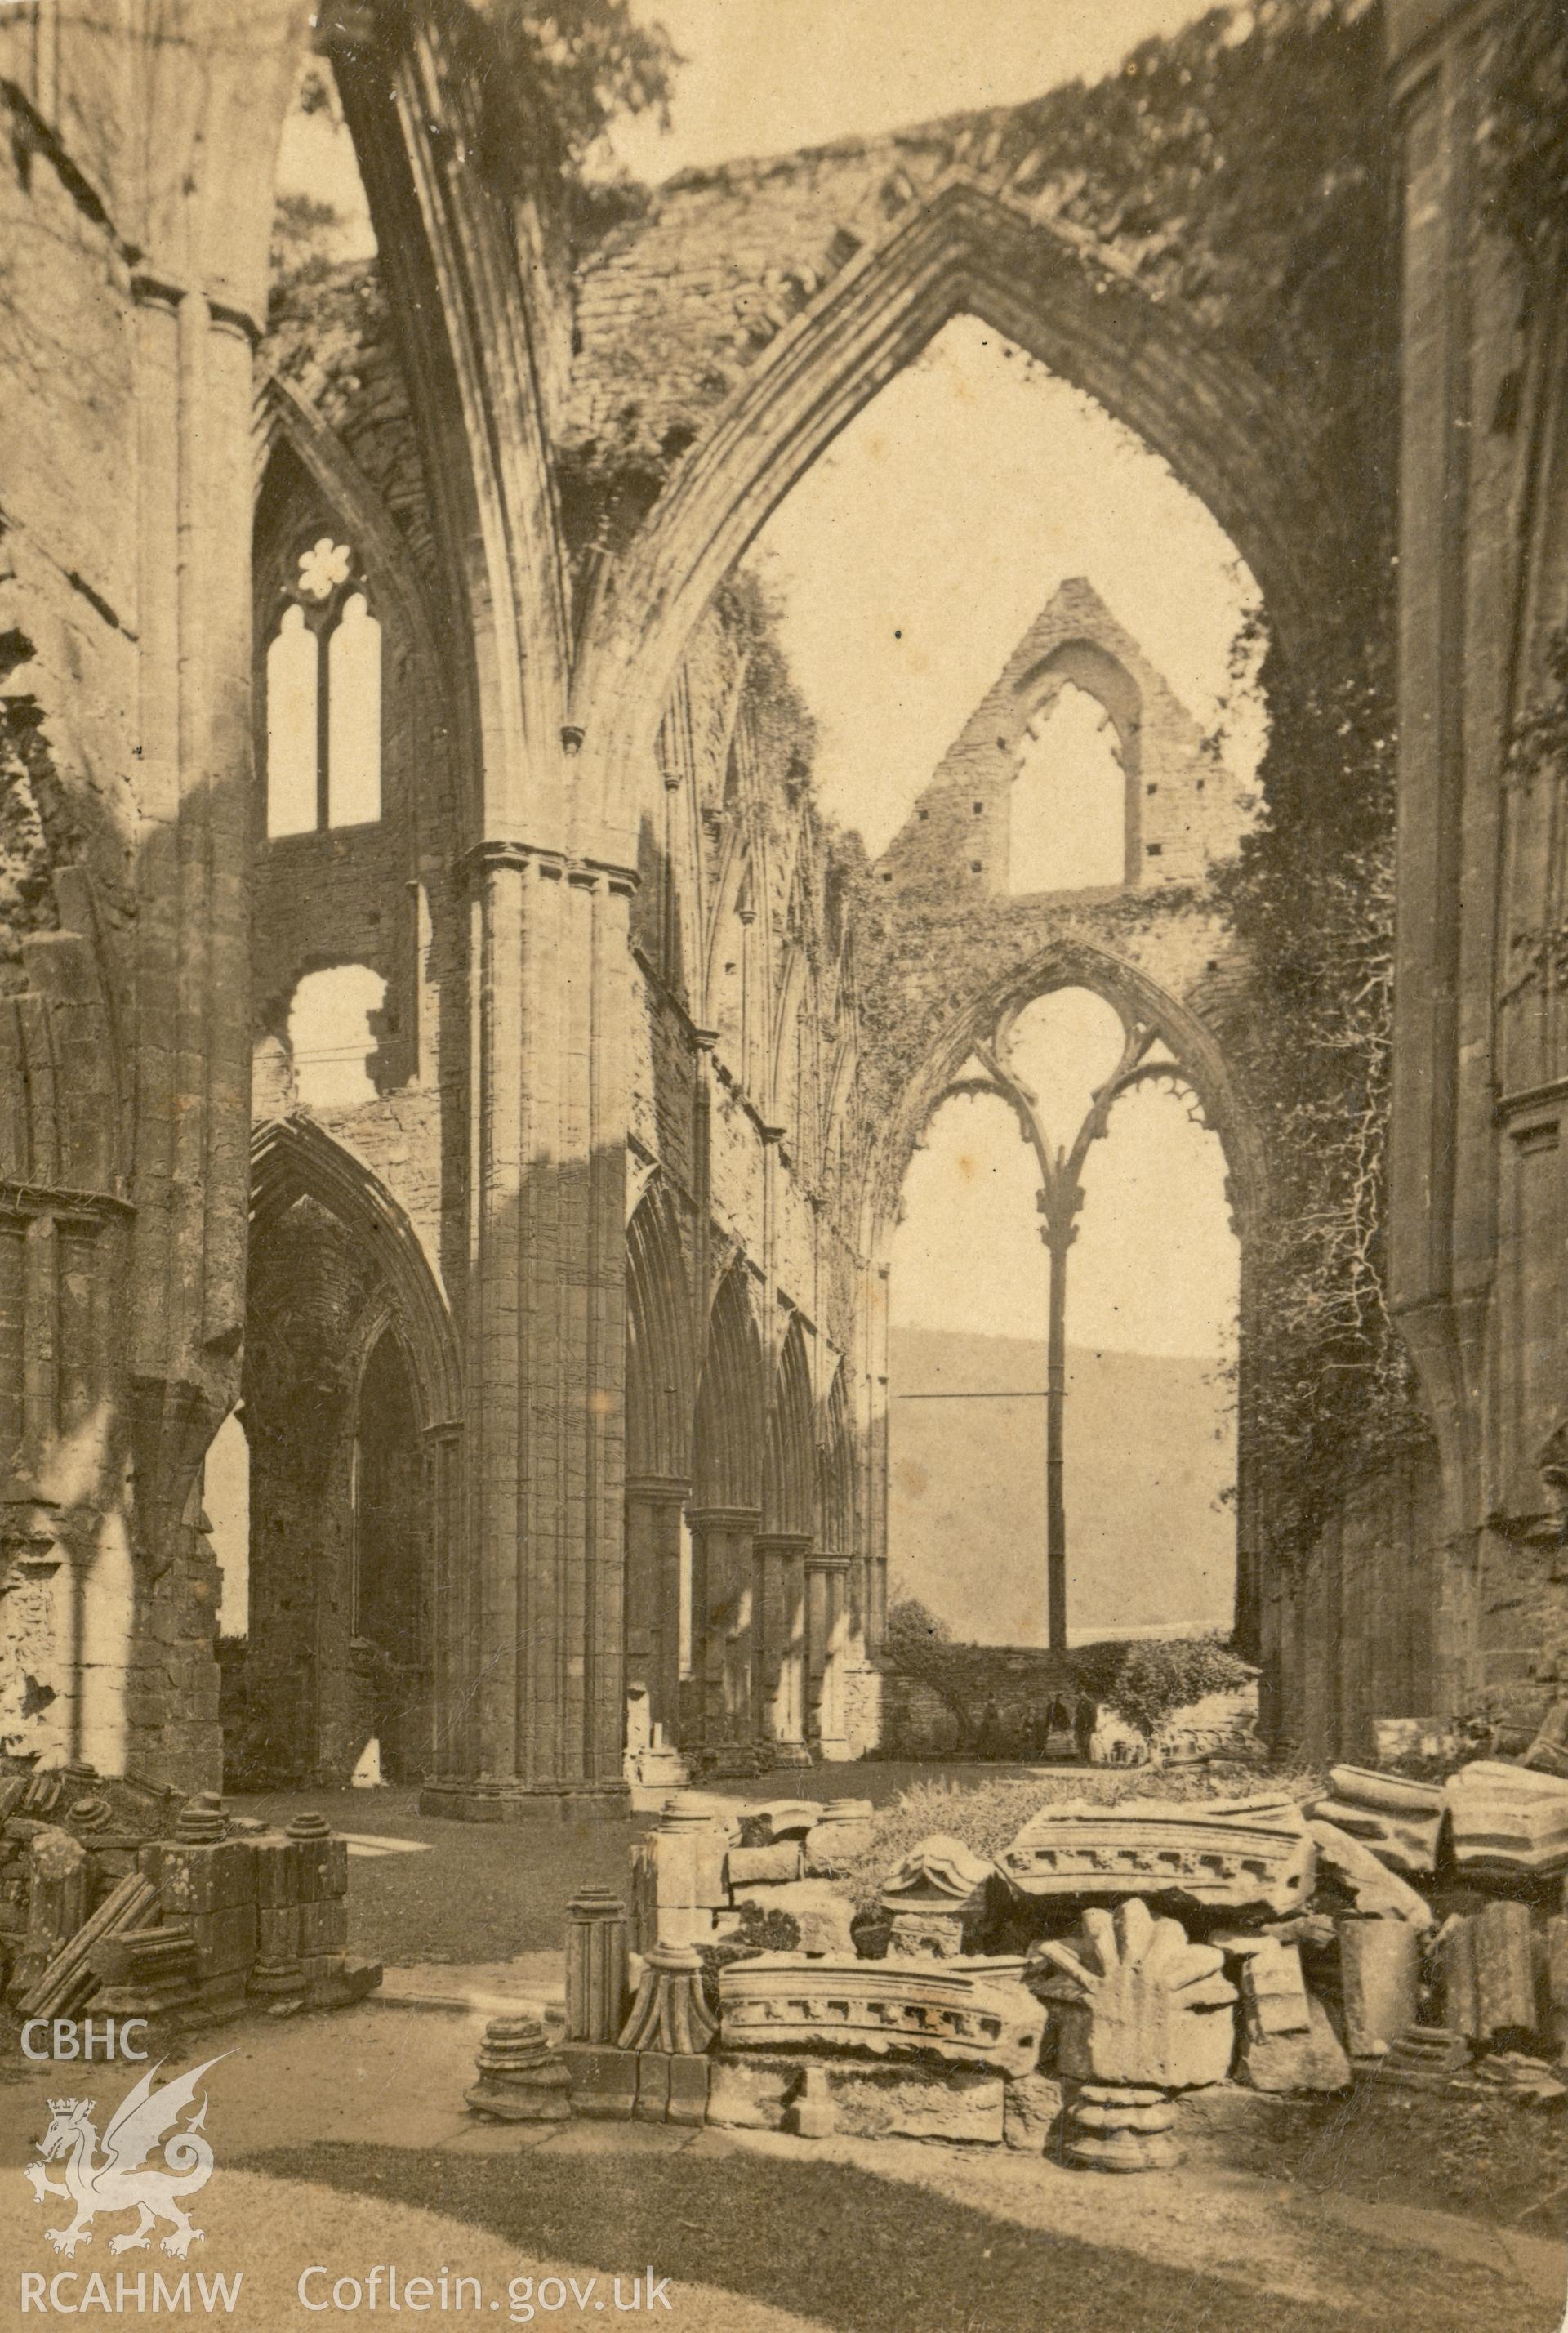 Digital copy of a circa 1870 albumen print showing an interior view of Tintern Abbey by J & J Dutton, Bath.